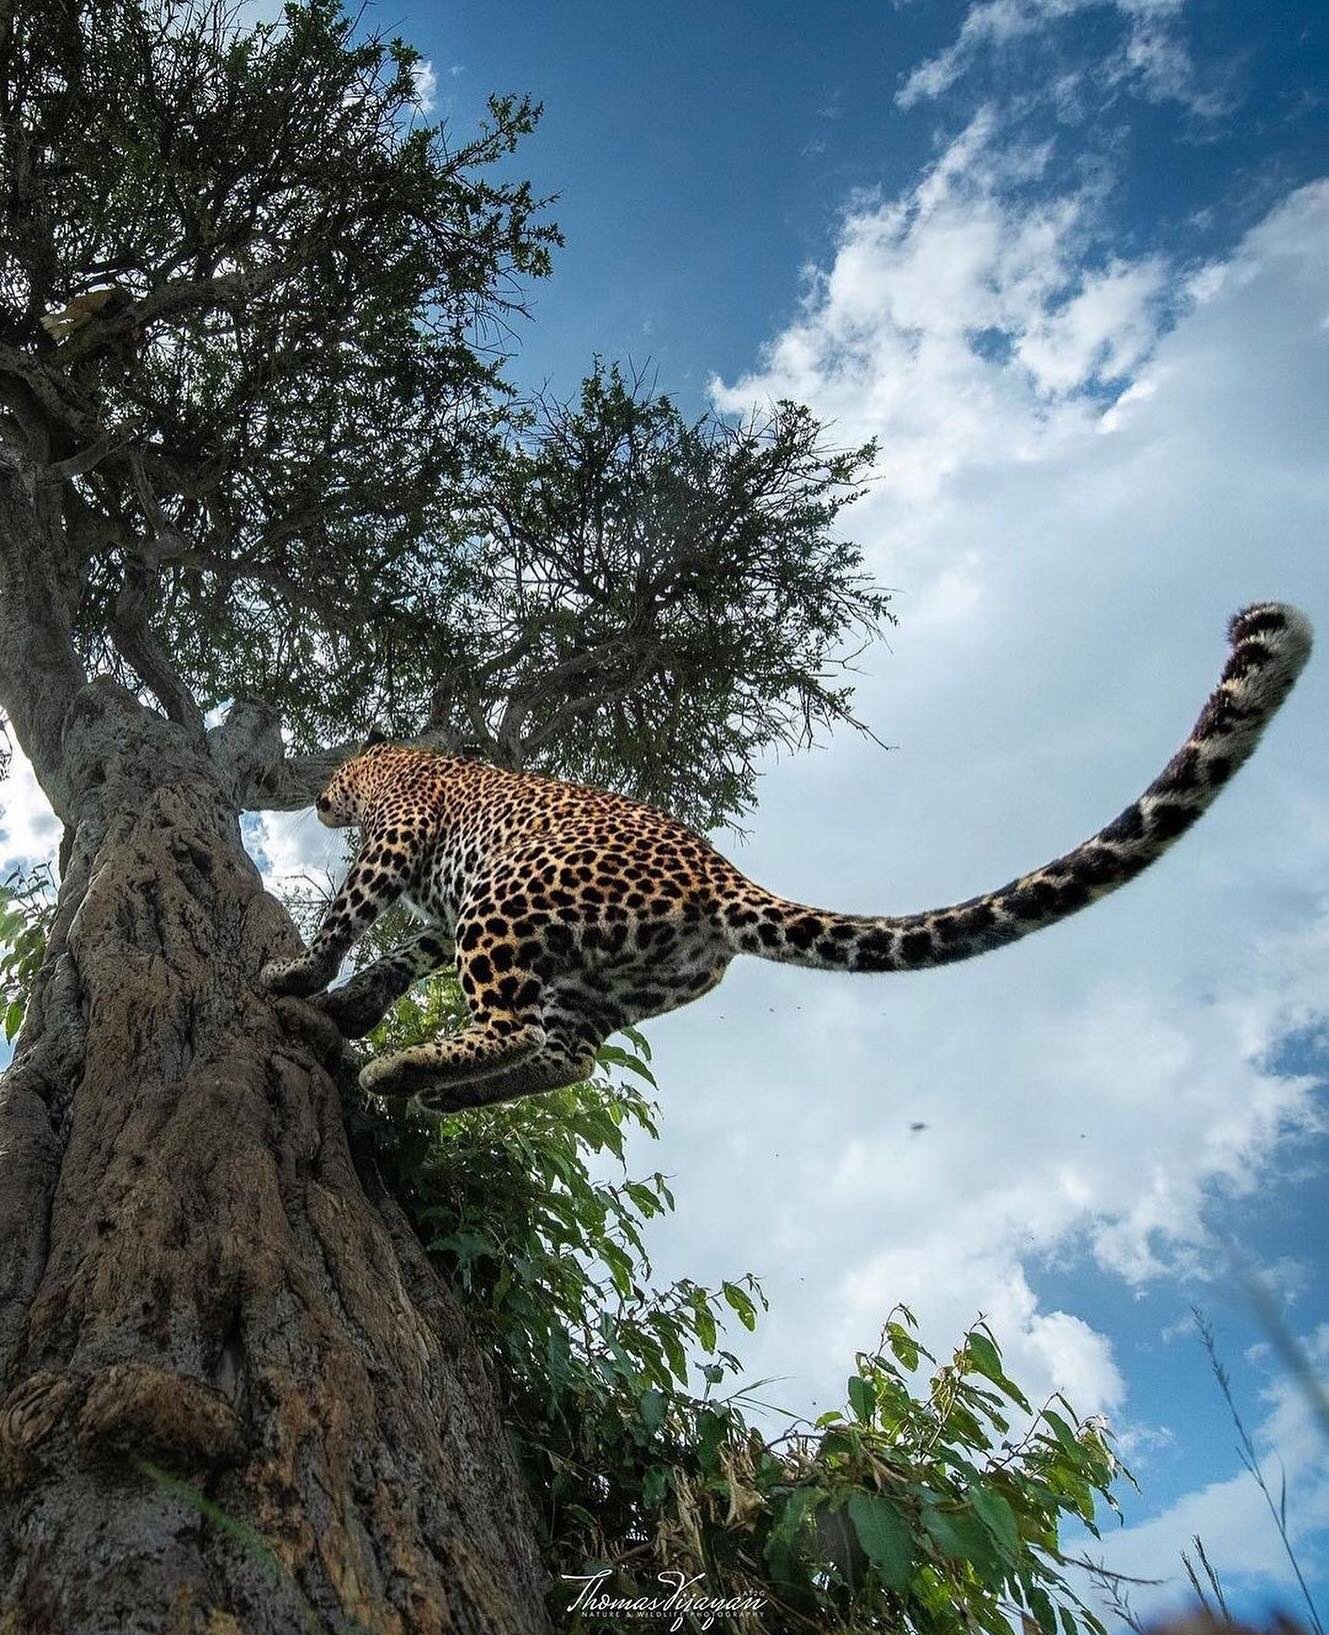 A different perspective of a leopard shot - it took 28 days to create by @thomasvijayan.

#Leopard #LoveLaikipia #Wildlife #Safari #Wilderness #IamaTraveler @lovelaikipia